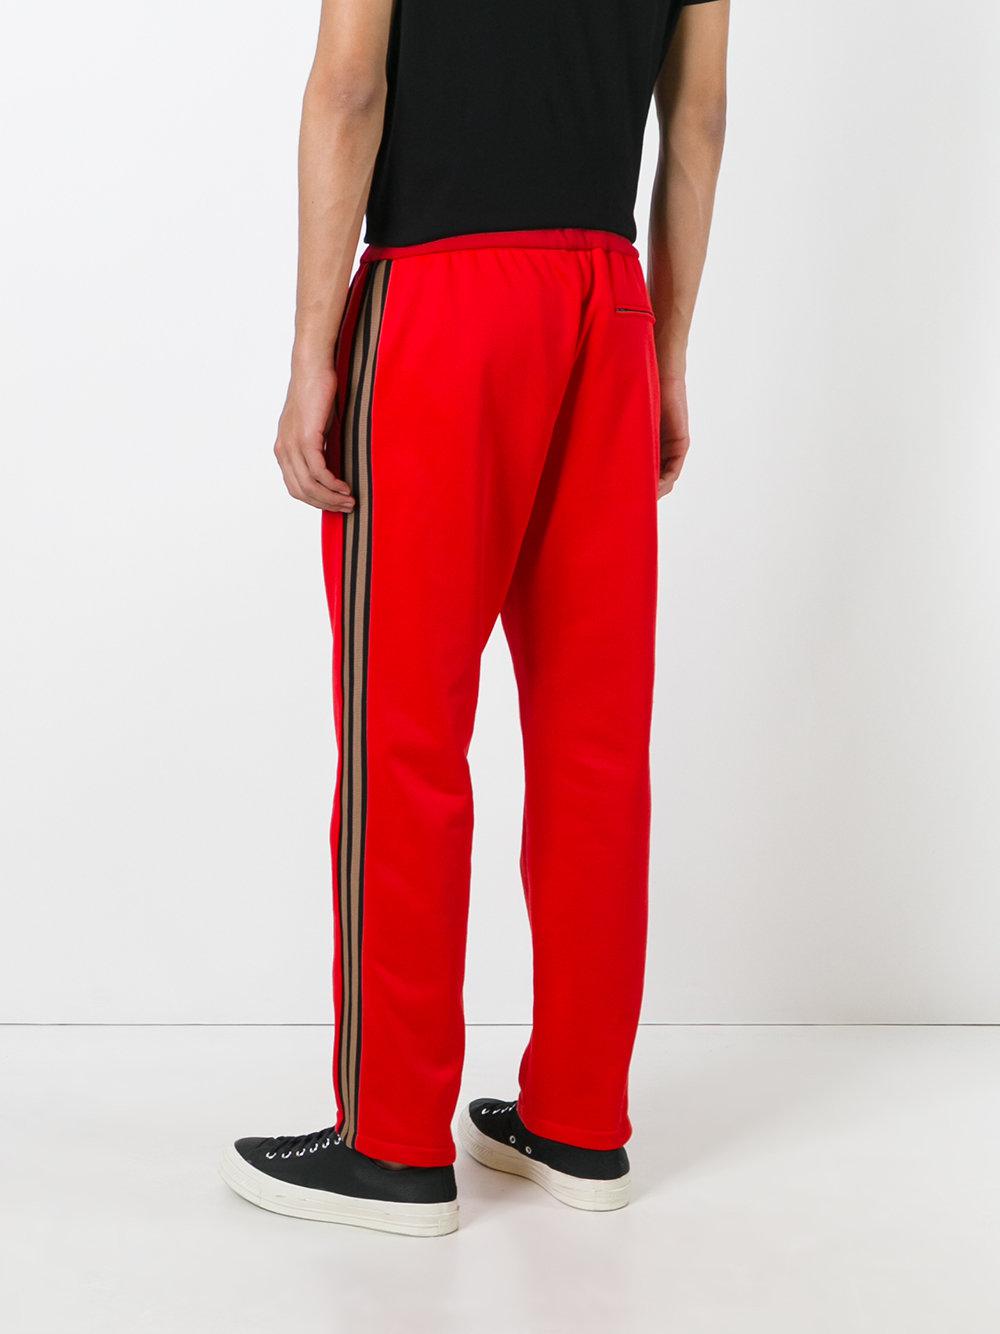 Lyst - Golden Goose Deluxe Brand Side Stripe Track Pants in Red for Men